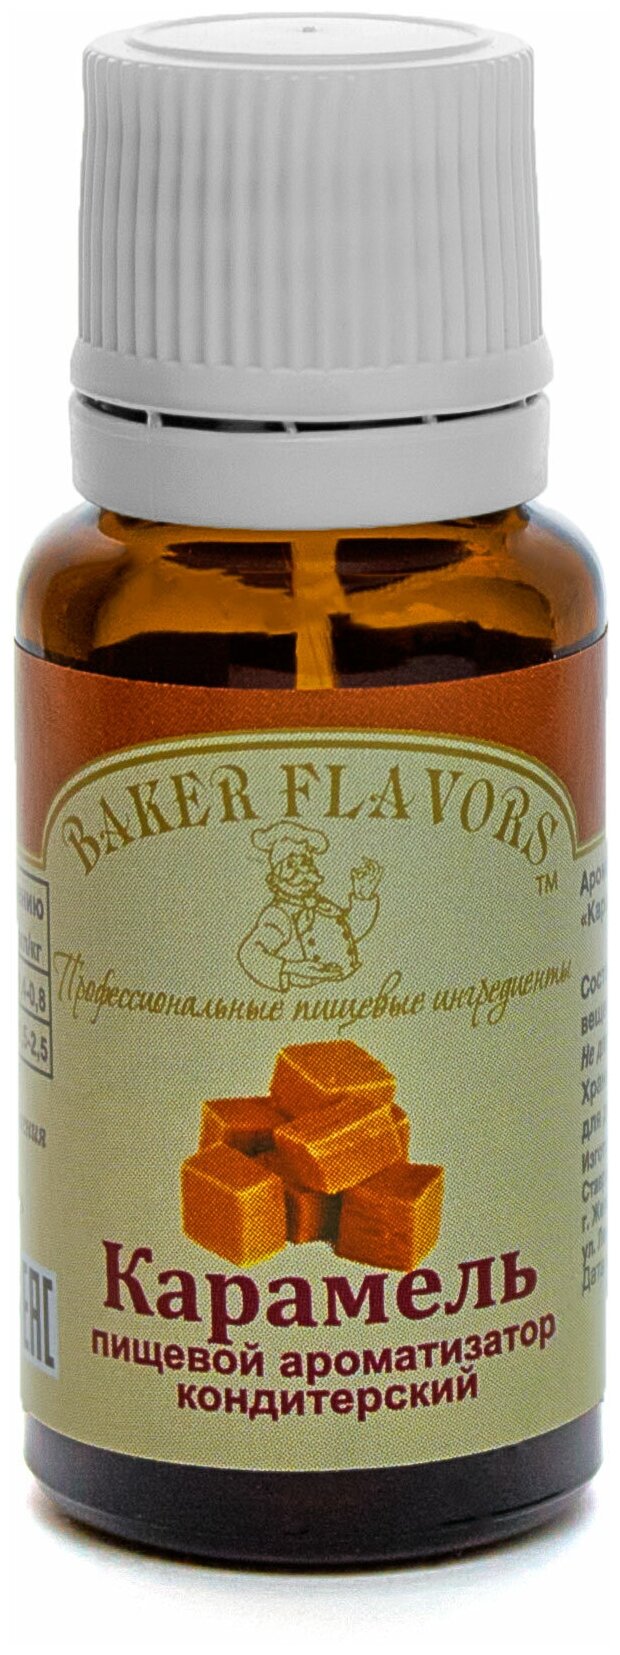 Baker Flavors ароматизатор пищевой Карамель, 10 мл